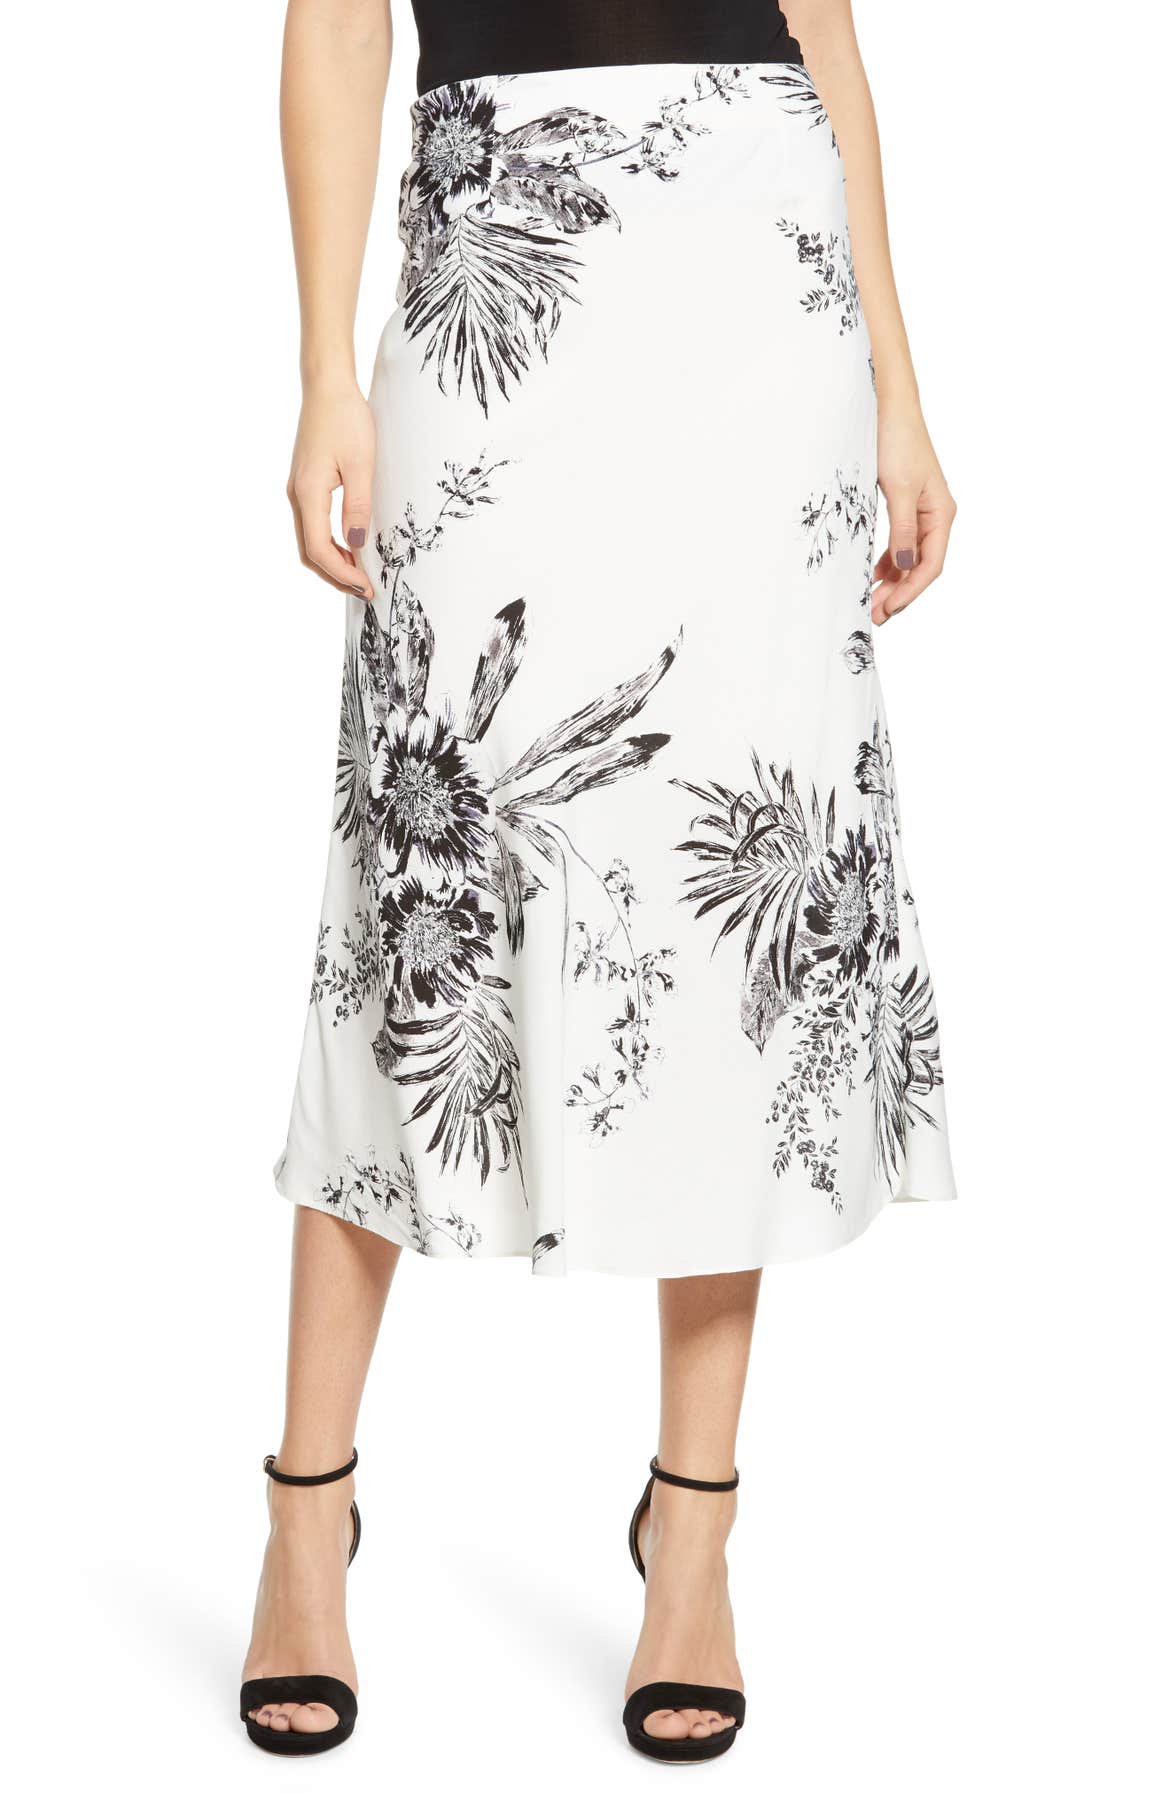  Bias Cut Midi Skirt, Main, color, IVORY ILLUSTRATED FLORAL